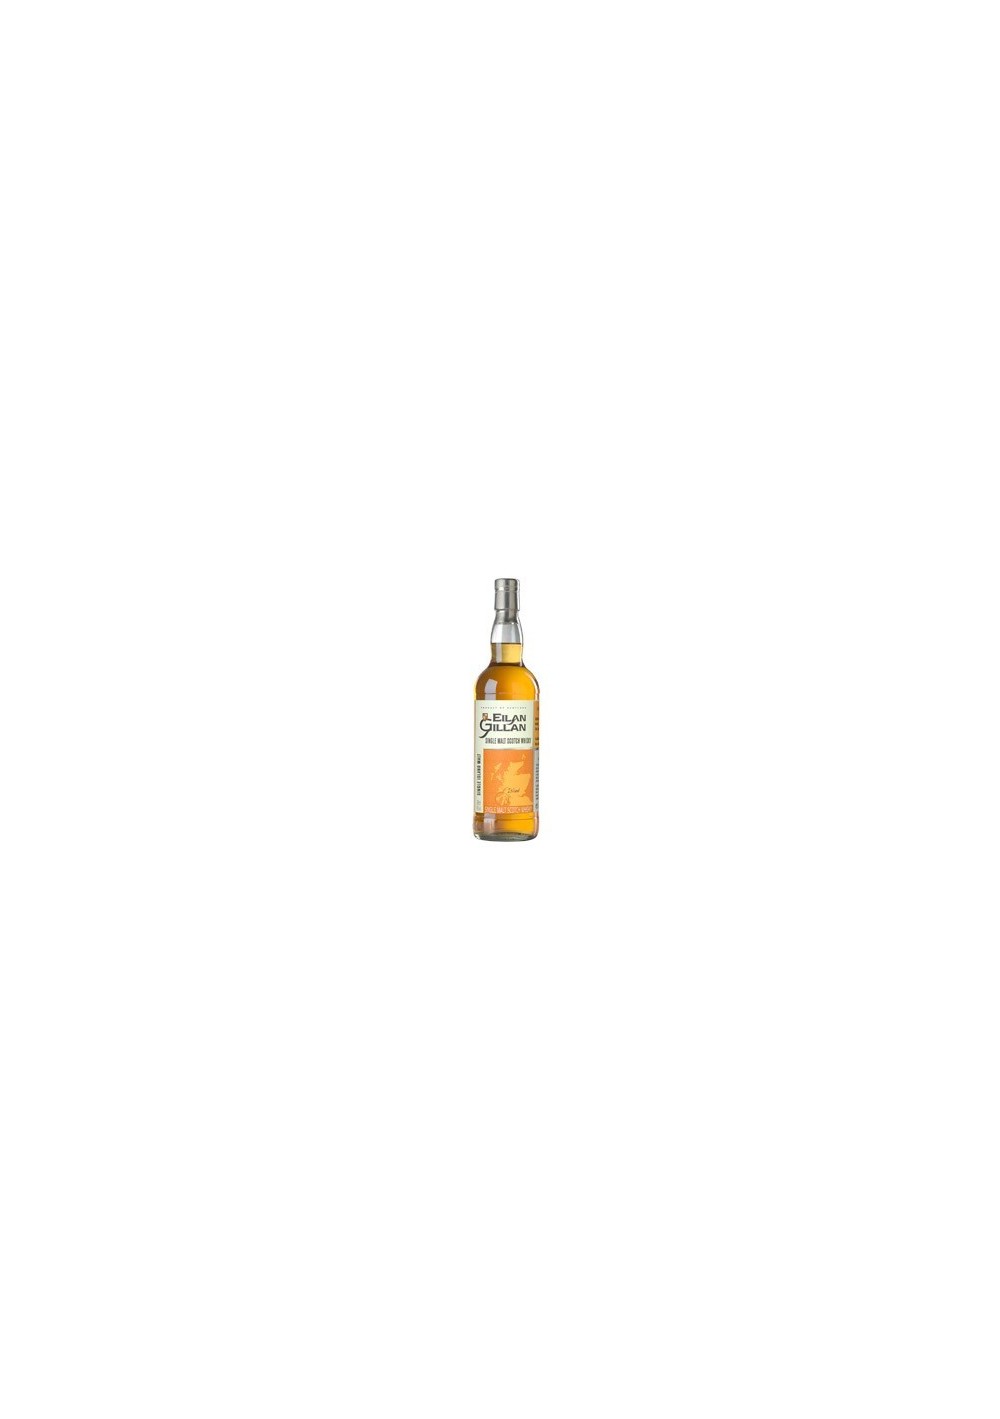 Whisky Eilan Gillan - Single Malt - Islay